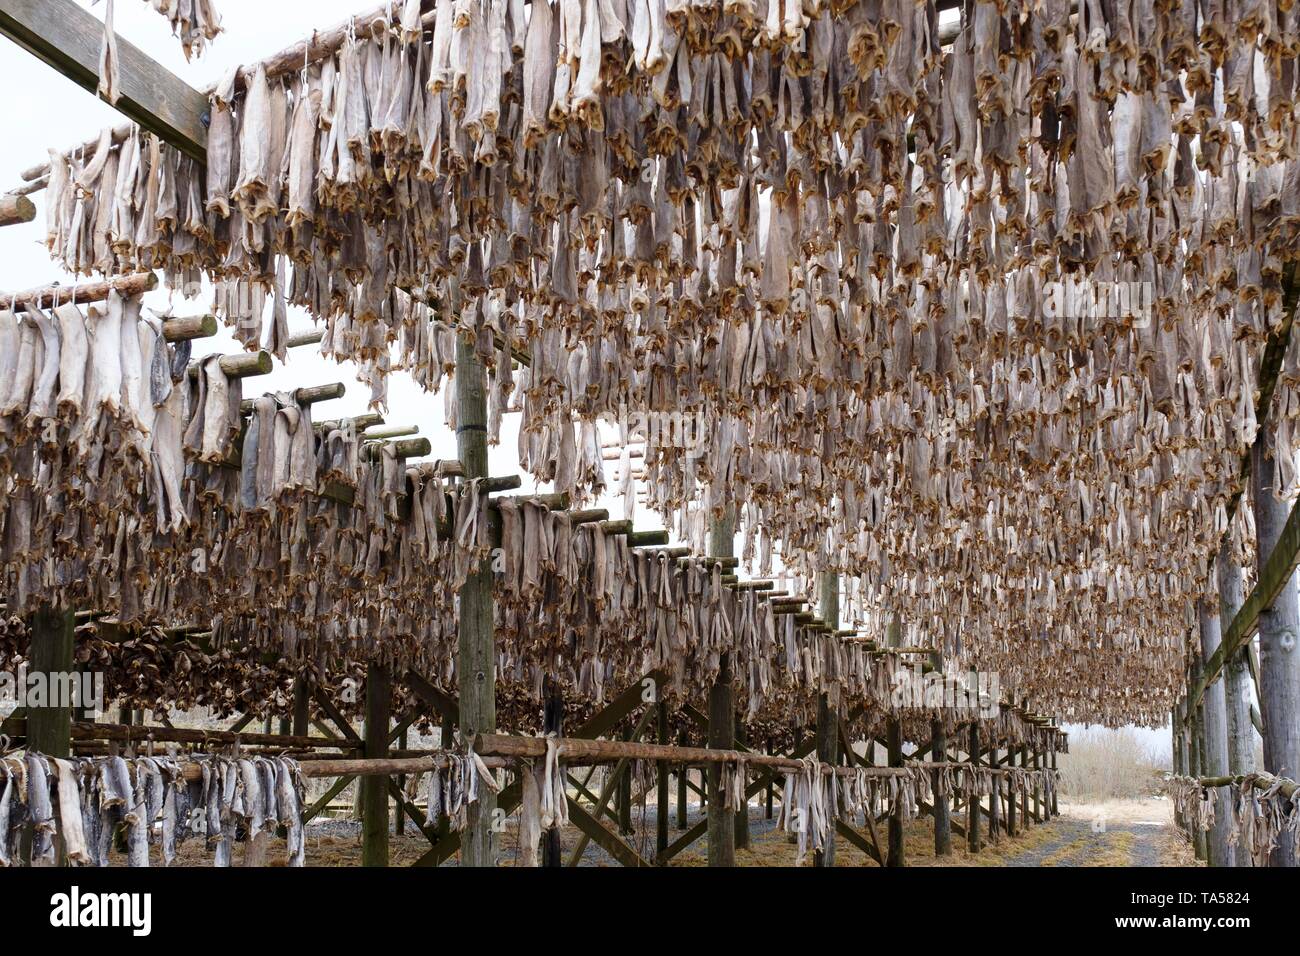 Cod, stockfish, fish heads hanging on wooden racks for drying, Svolvaer, Austvagoy, Lofoten, Norway Stock Photo